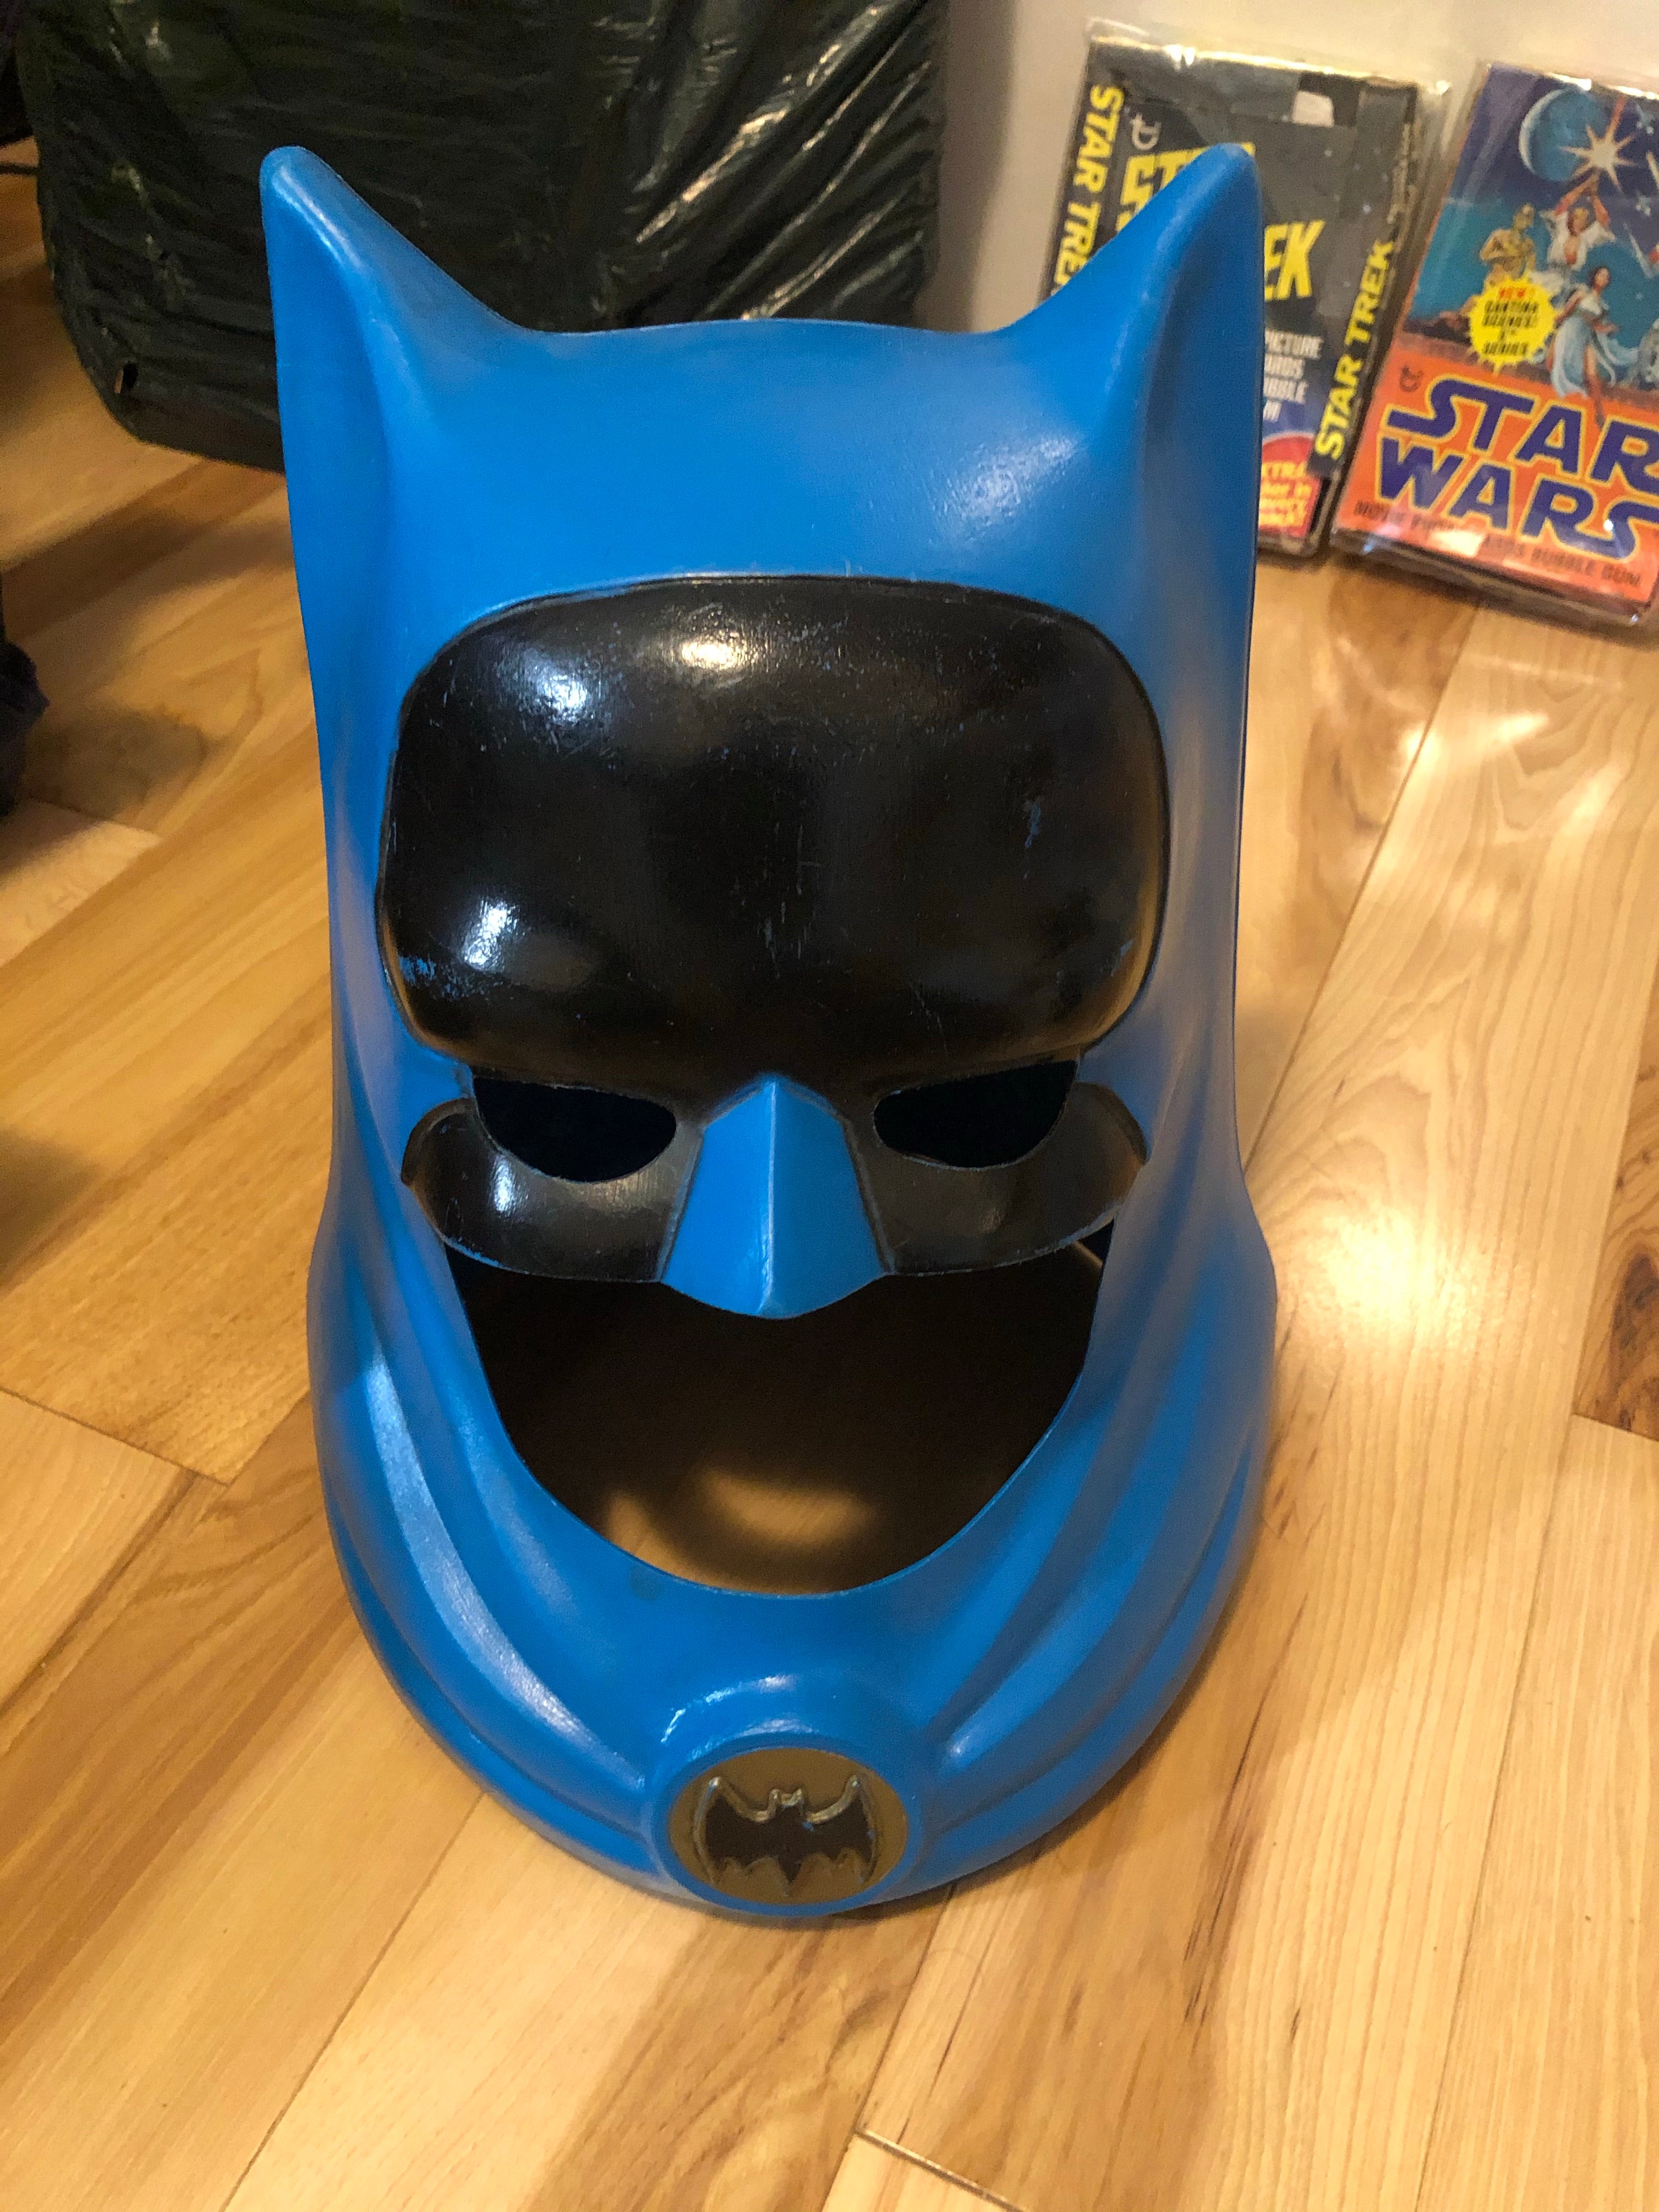 1966 Ideal toys Rare original Batman plastic toy helmet